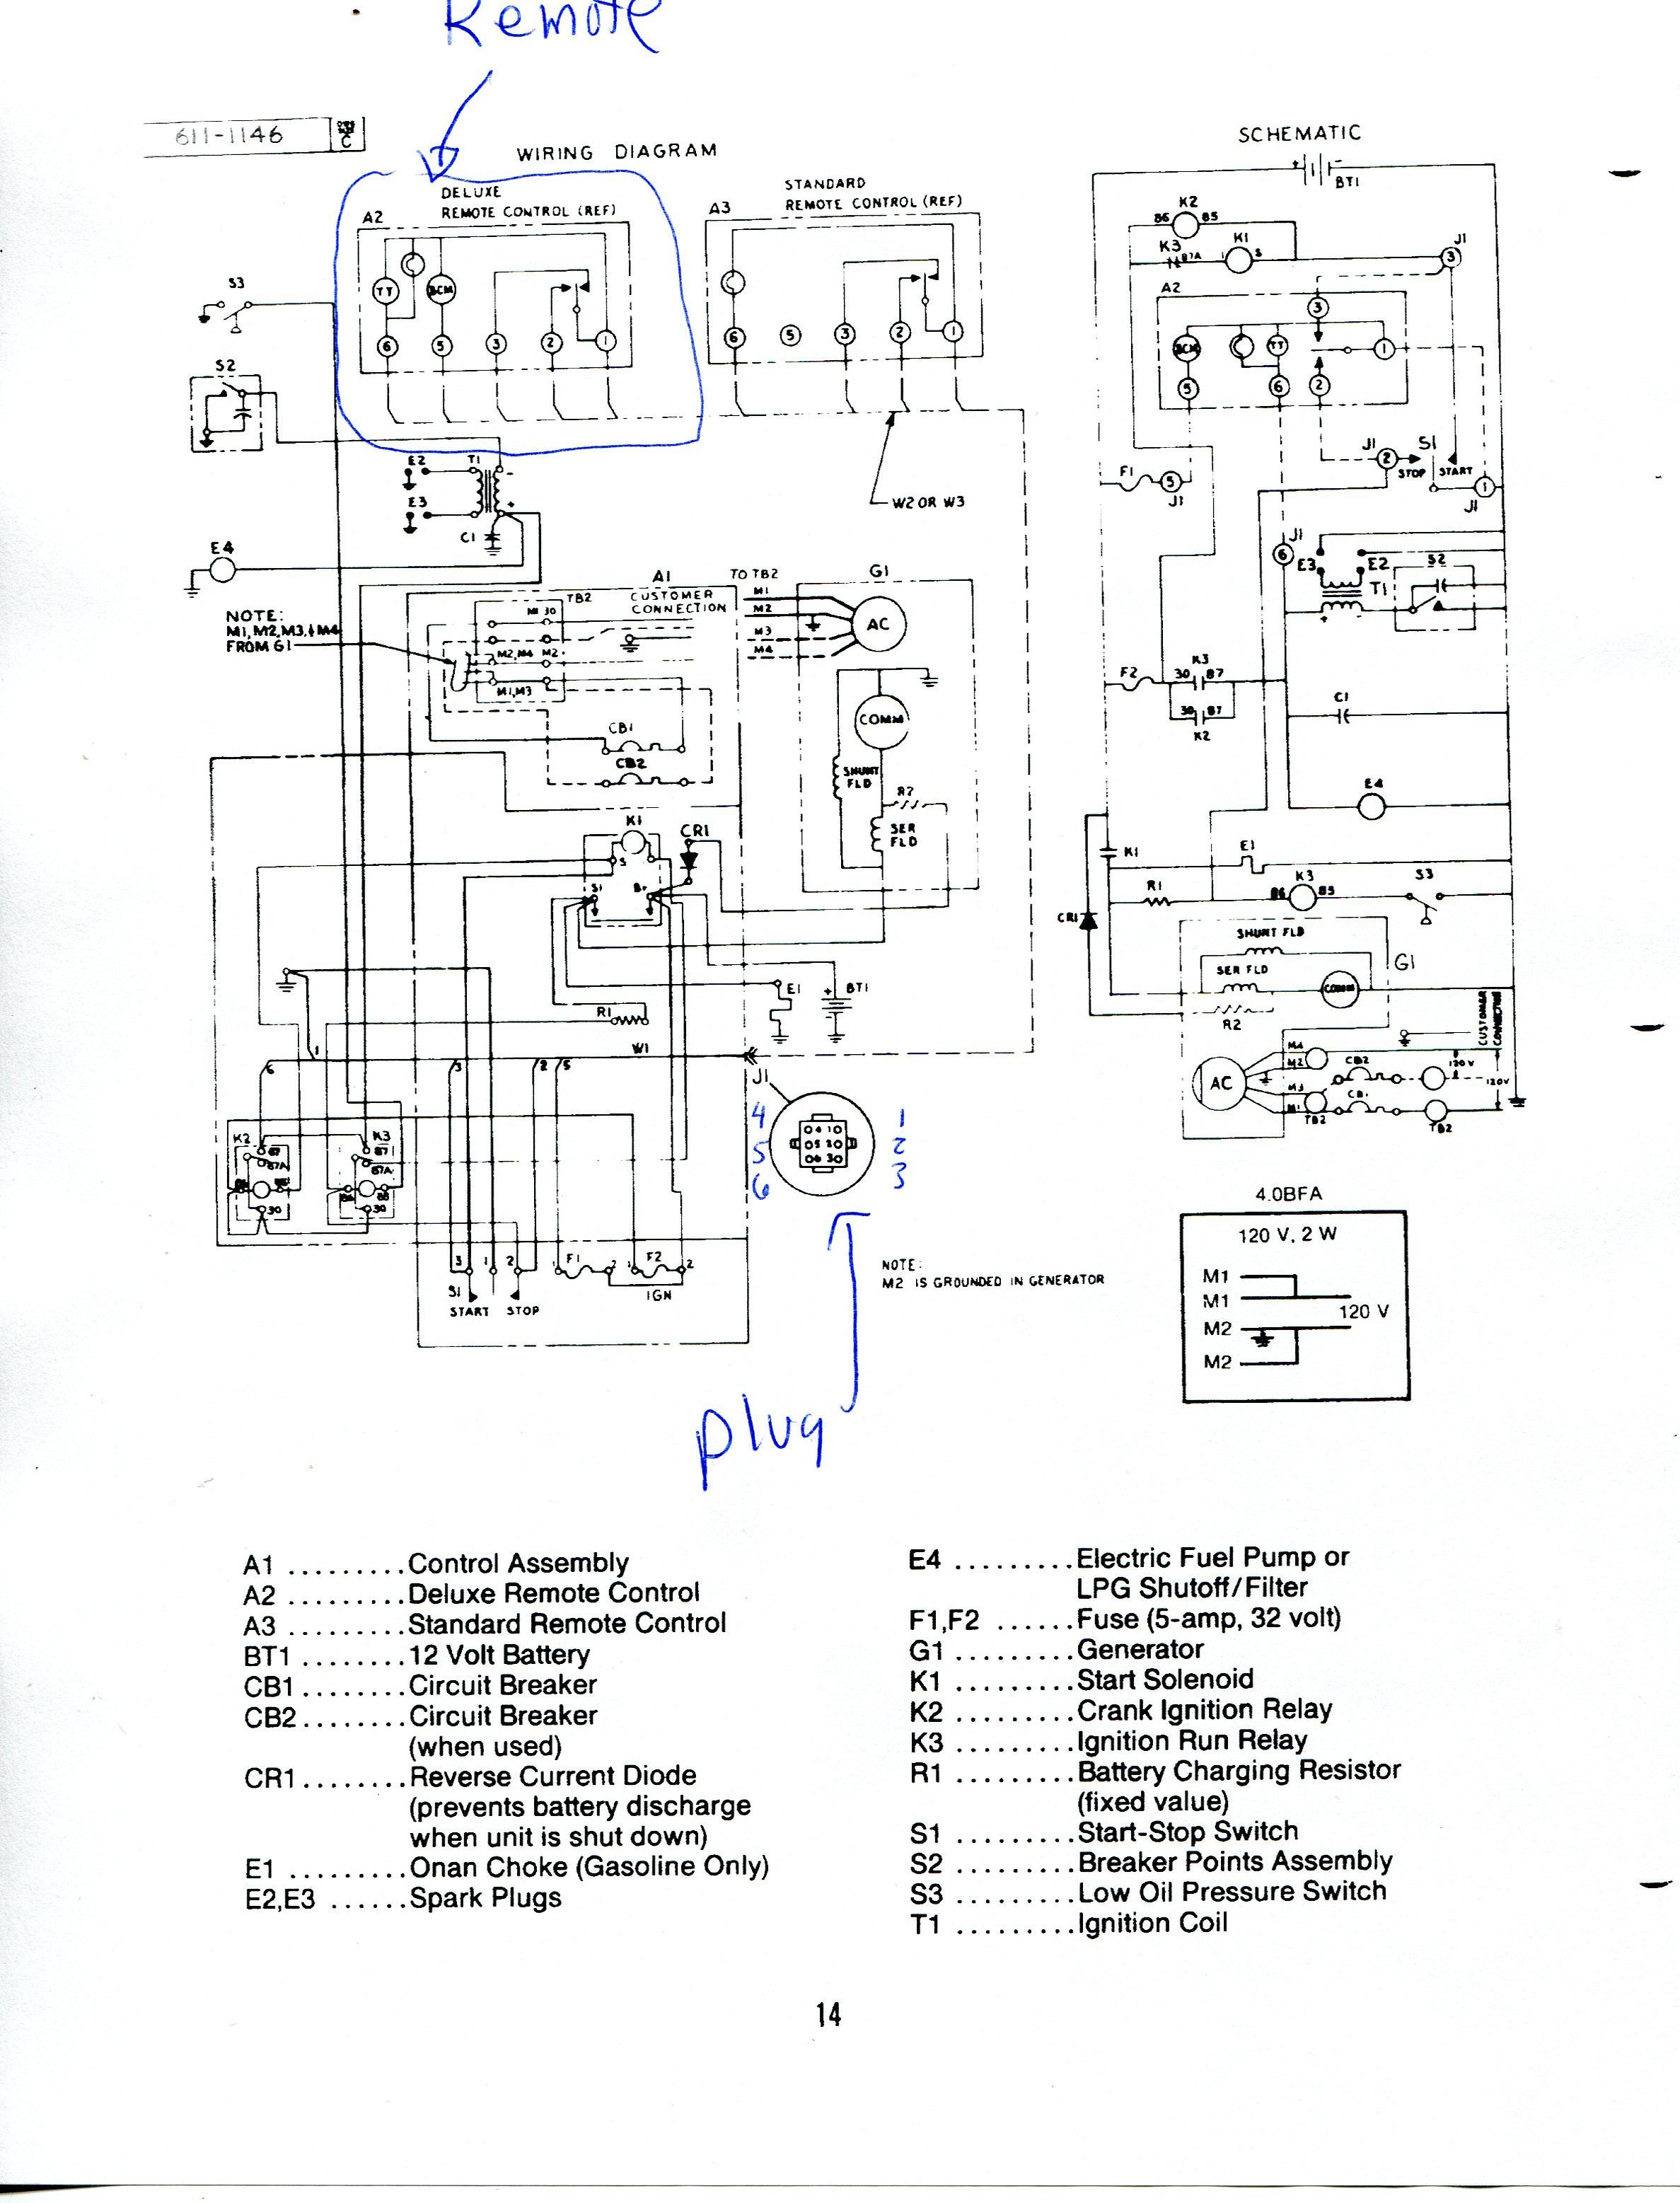 Kohler Generator Wiring Diagram Valid Generator Air Filter Location An Marine Generator Wiring